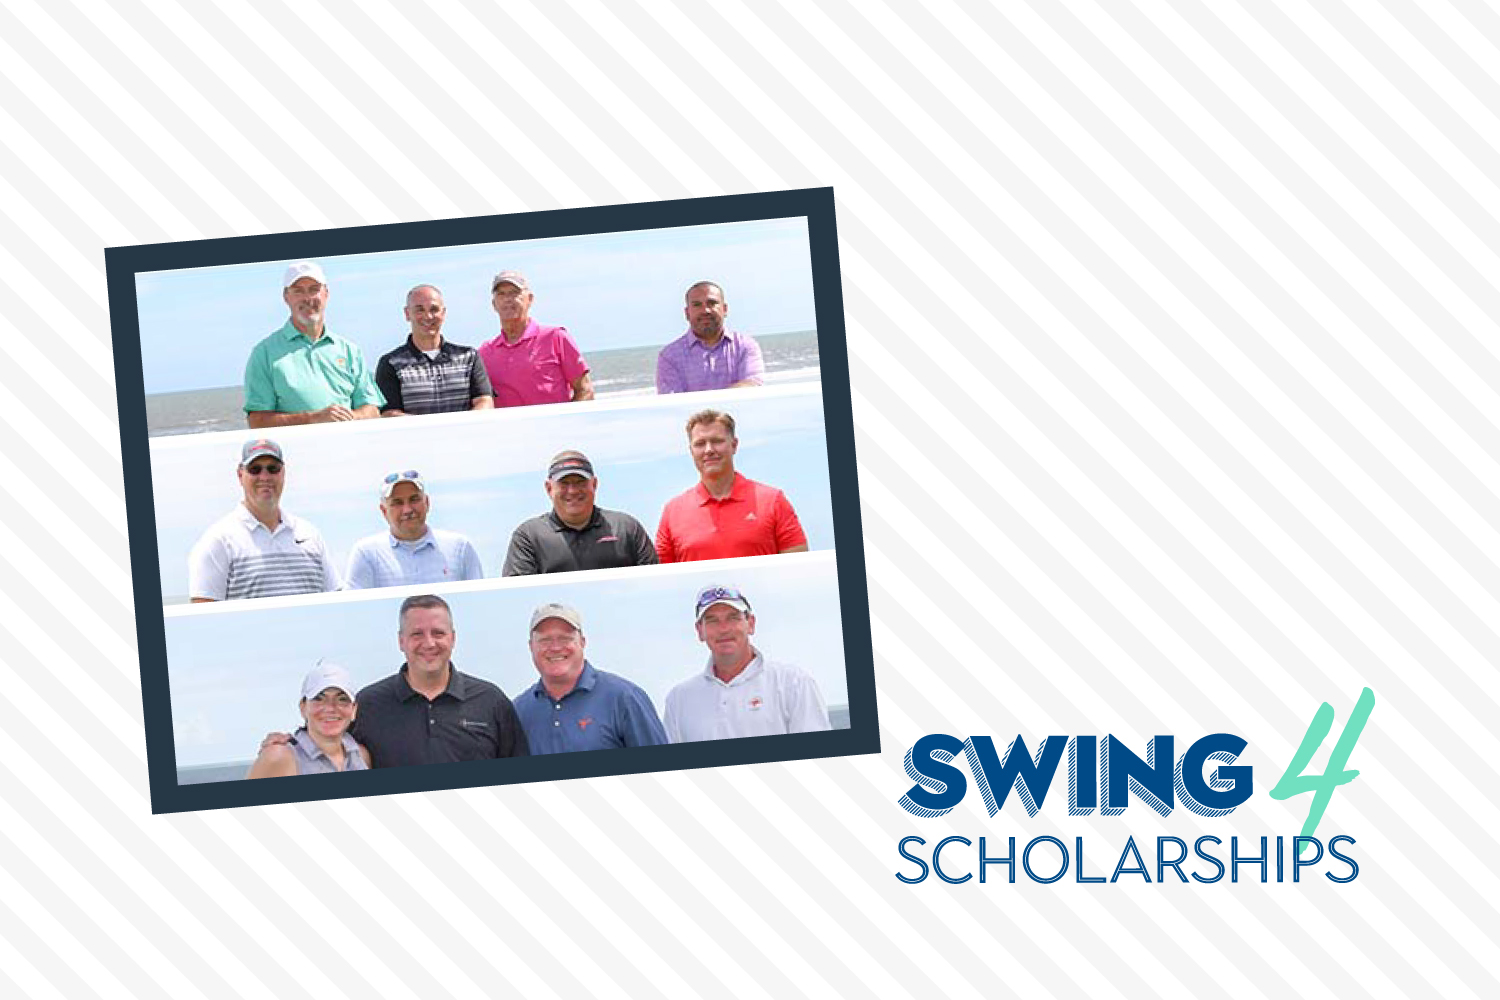 Golfers ‘Swing 4 Scholarships’ at Balfour Beatty Communities Foundation golf event